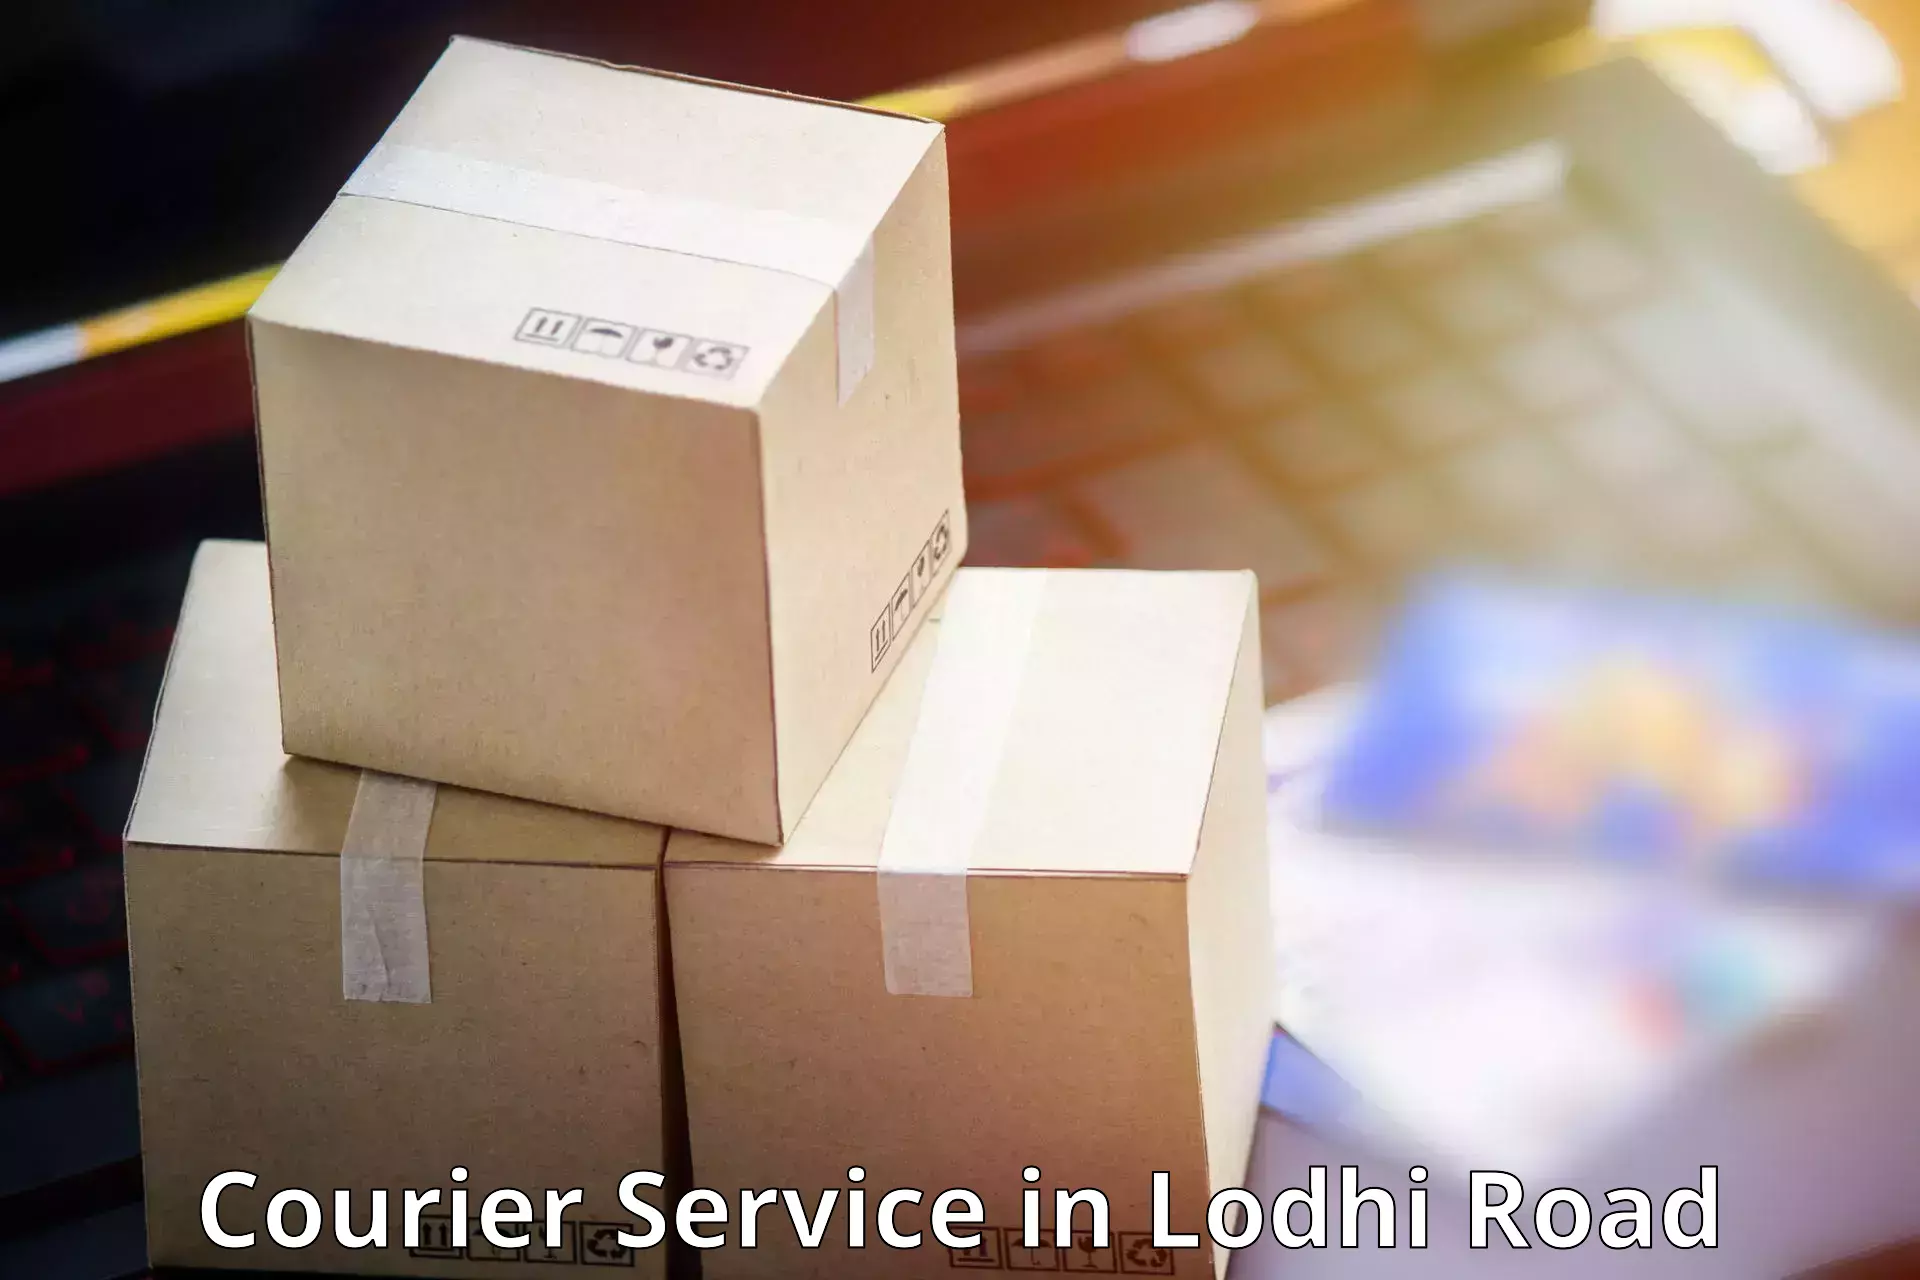 International parcel service in Lodhi Road